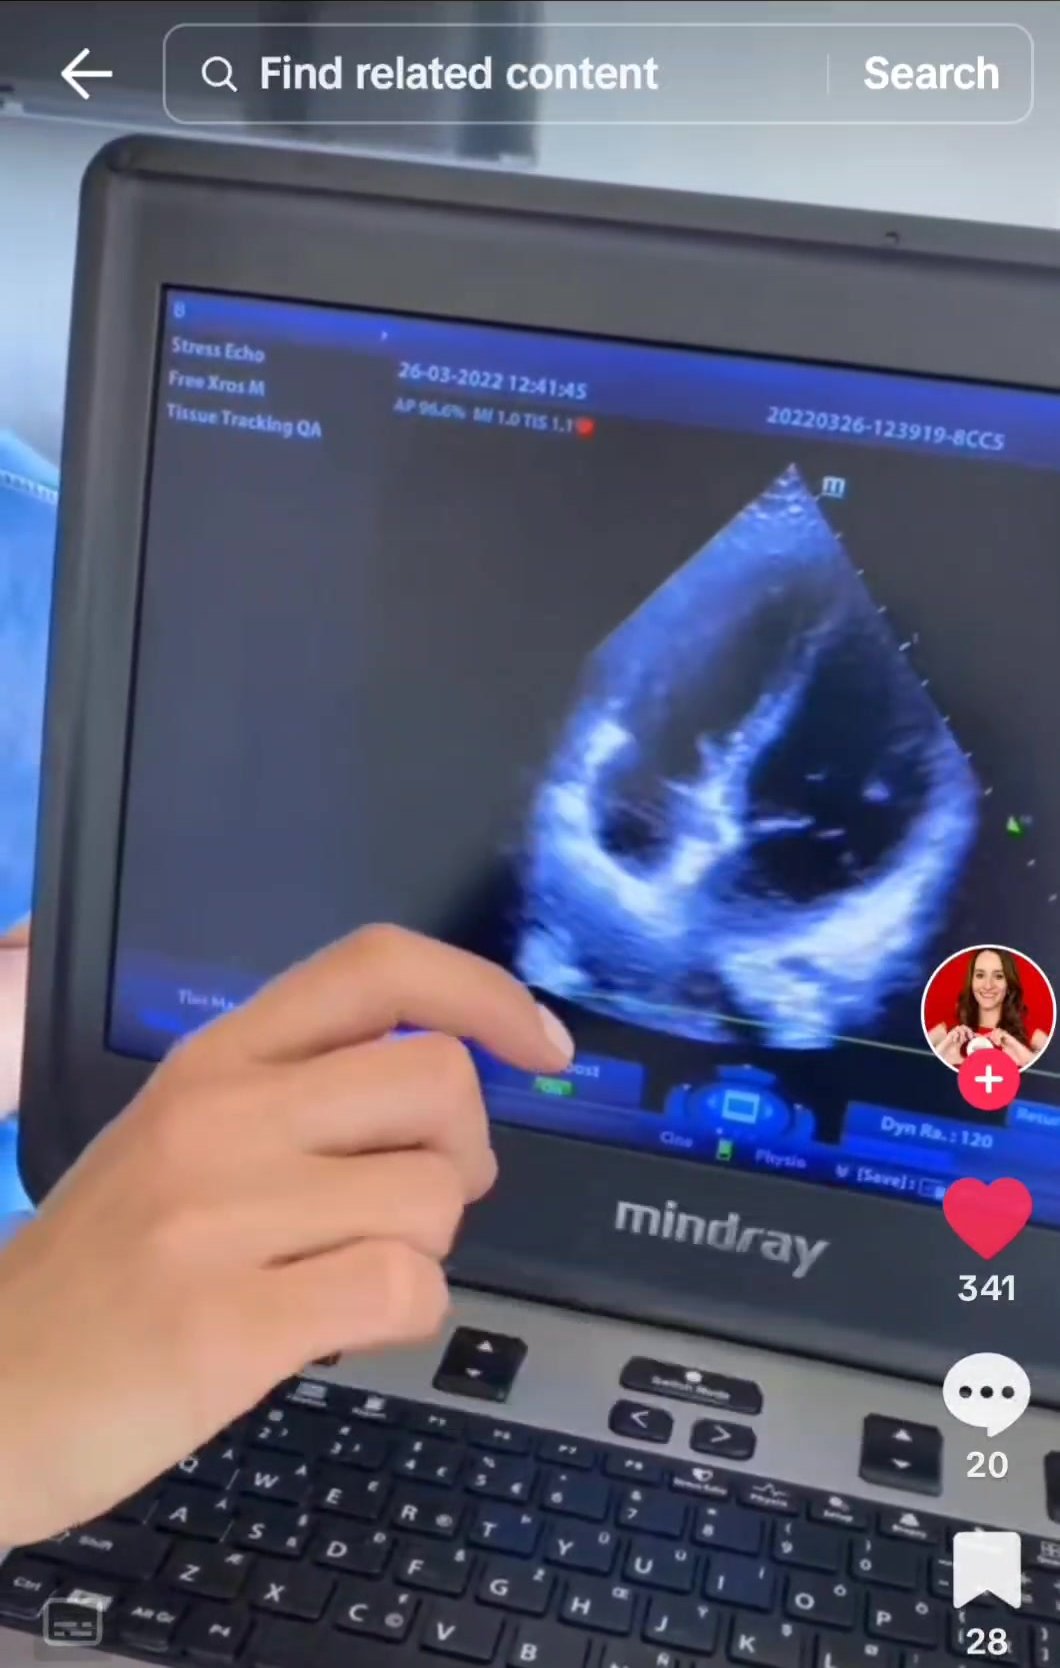 Woman doctor shows her echocardiogram